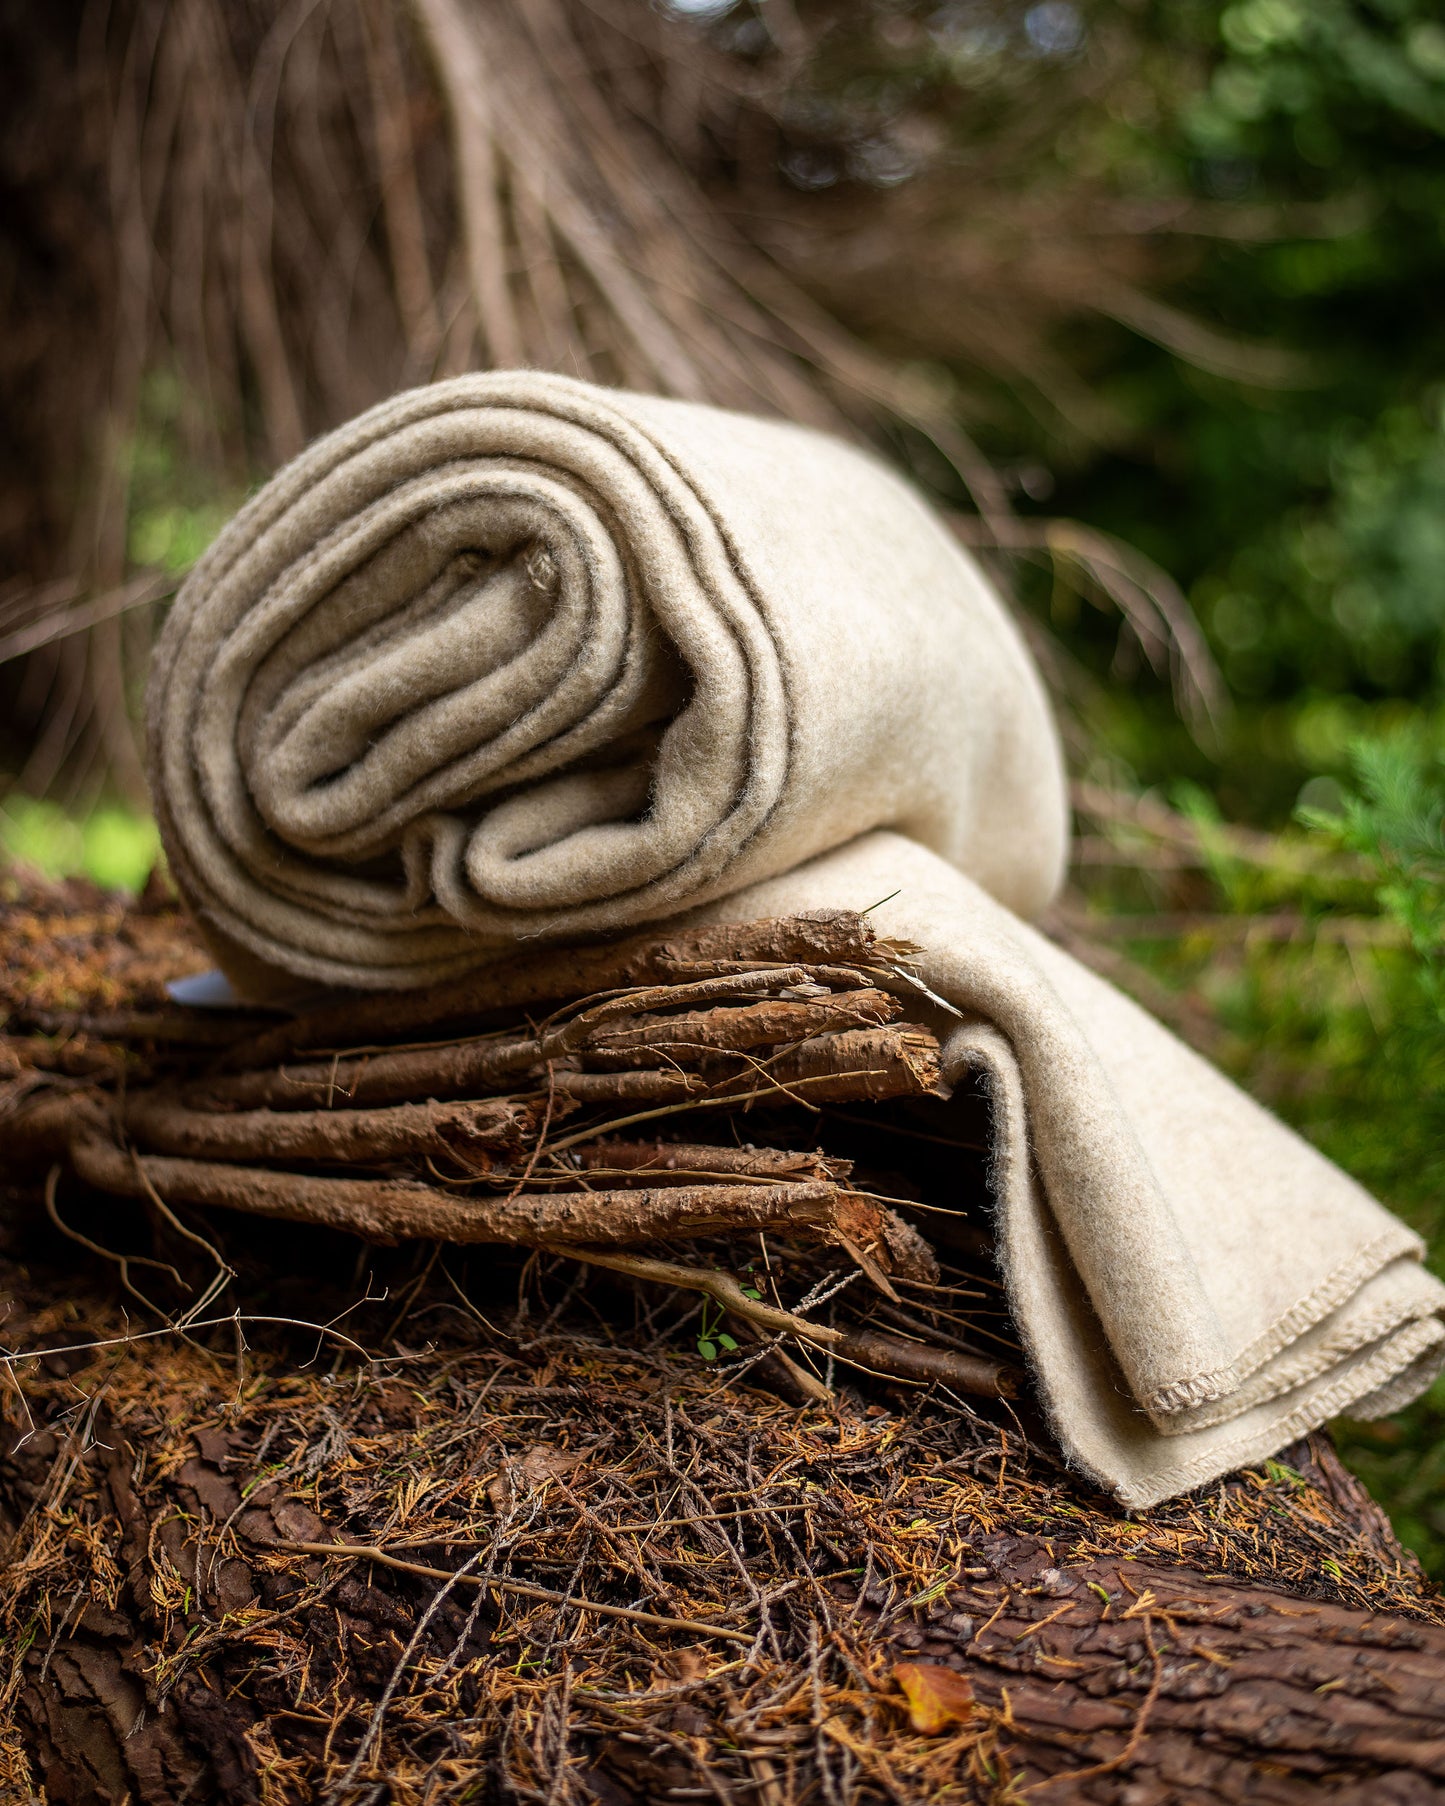 Pure Sheep's Wool Blanket- Natural Beige